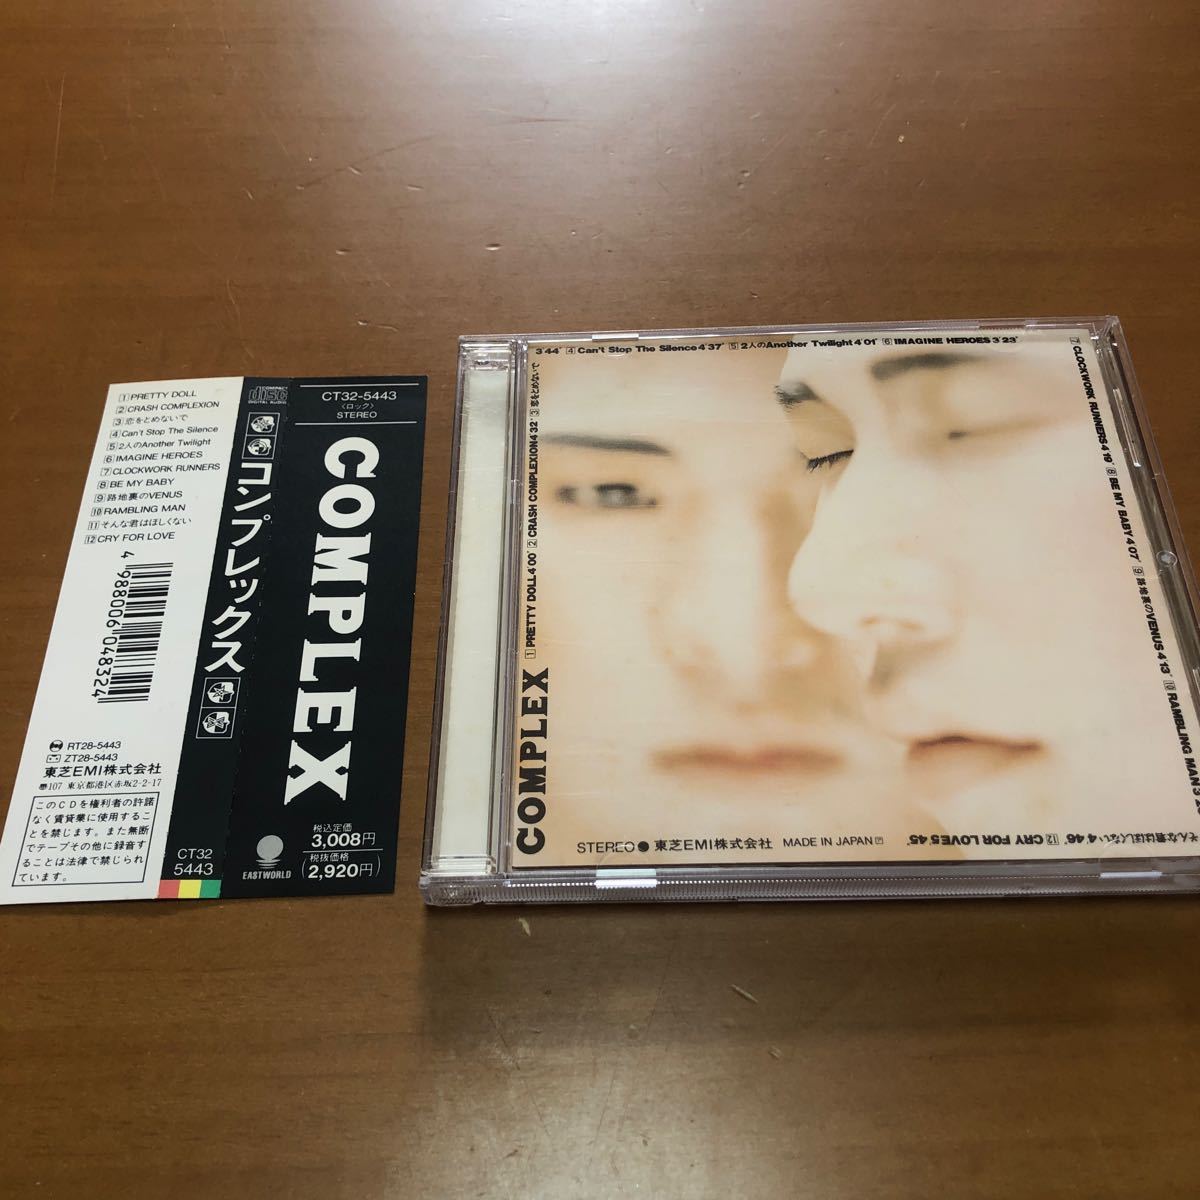 ◆ 【CD 】「COMPLEX コンプレックス」 ◆ 吉川晃司　布袋寅泰　BOOWY 帯付き【送料無料】 _画像1